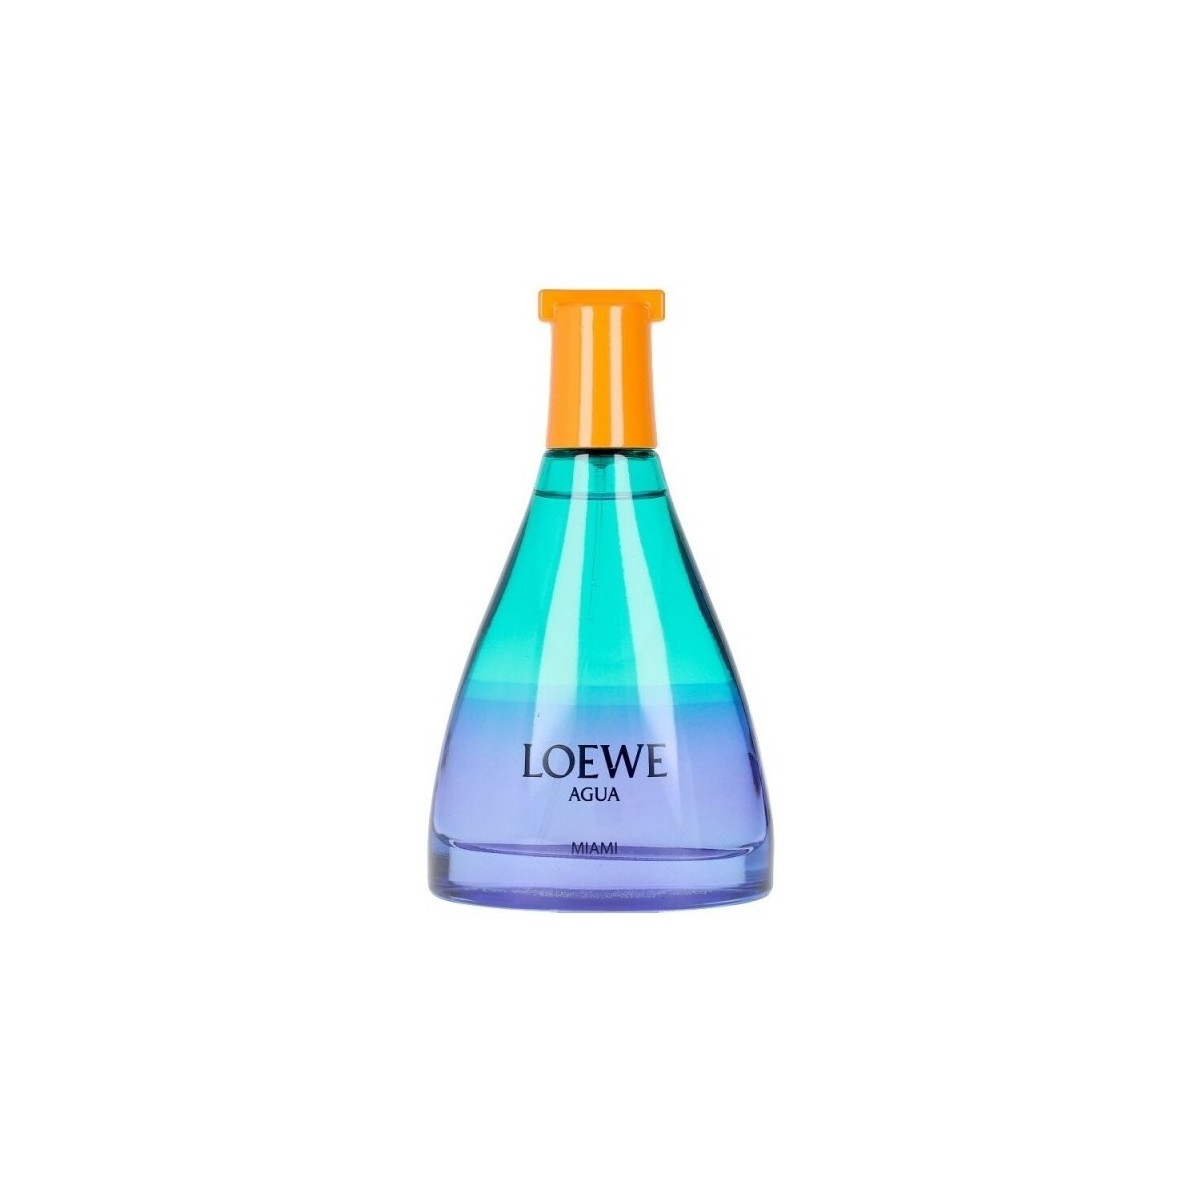 beleza Mulher Colónia Loewe Agua de  Miami  - colônia - 100ml - vaporizador Agua de Loewe Miami  - cologne - 100ml - spray